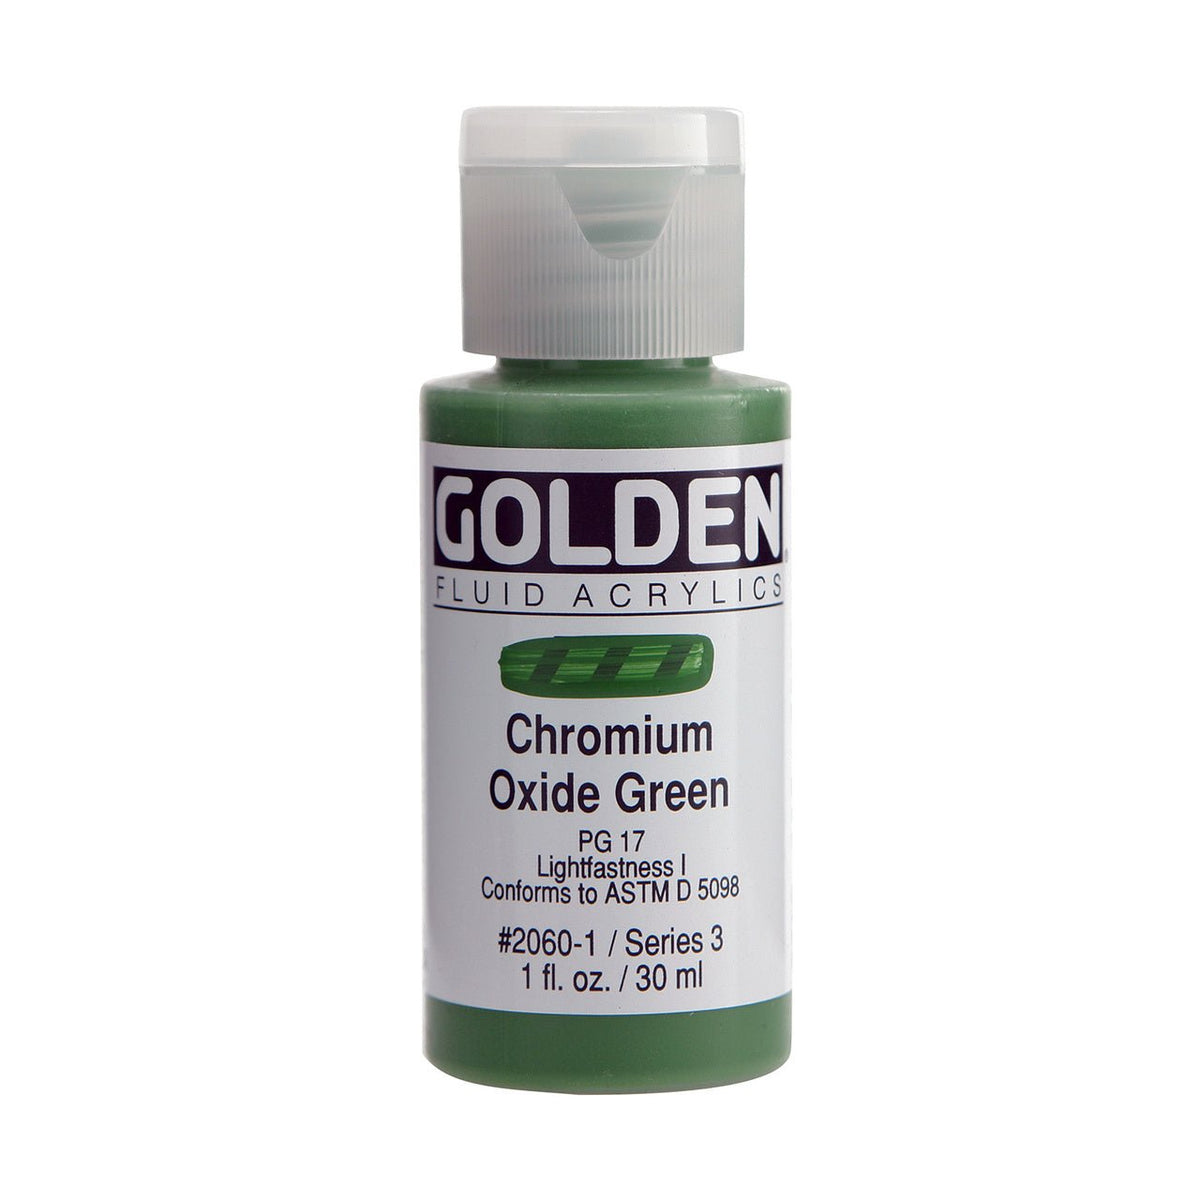 Golden Fluid Acrylic Chromium Oxide Green 1 oz - merriartist.com